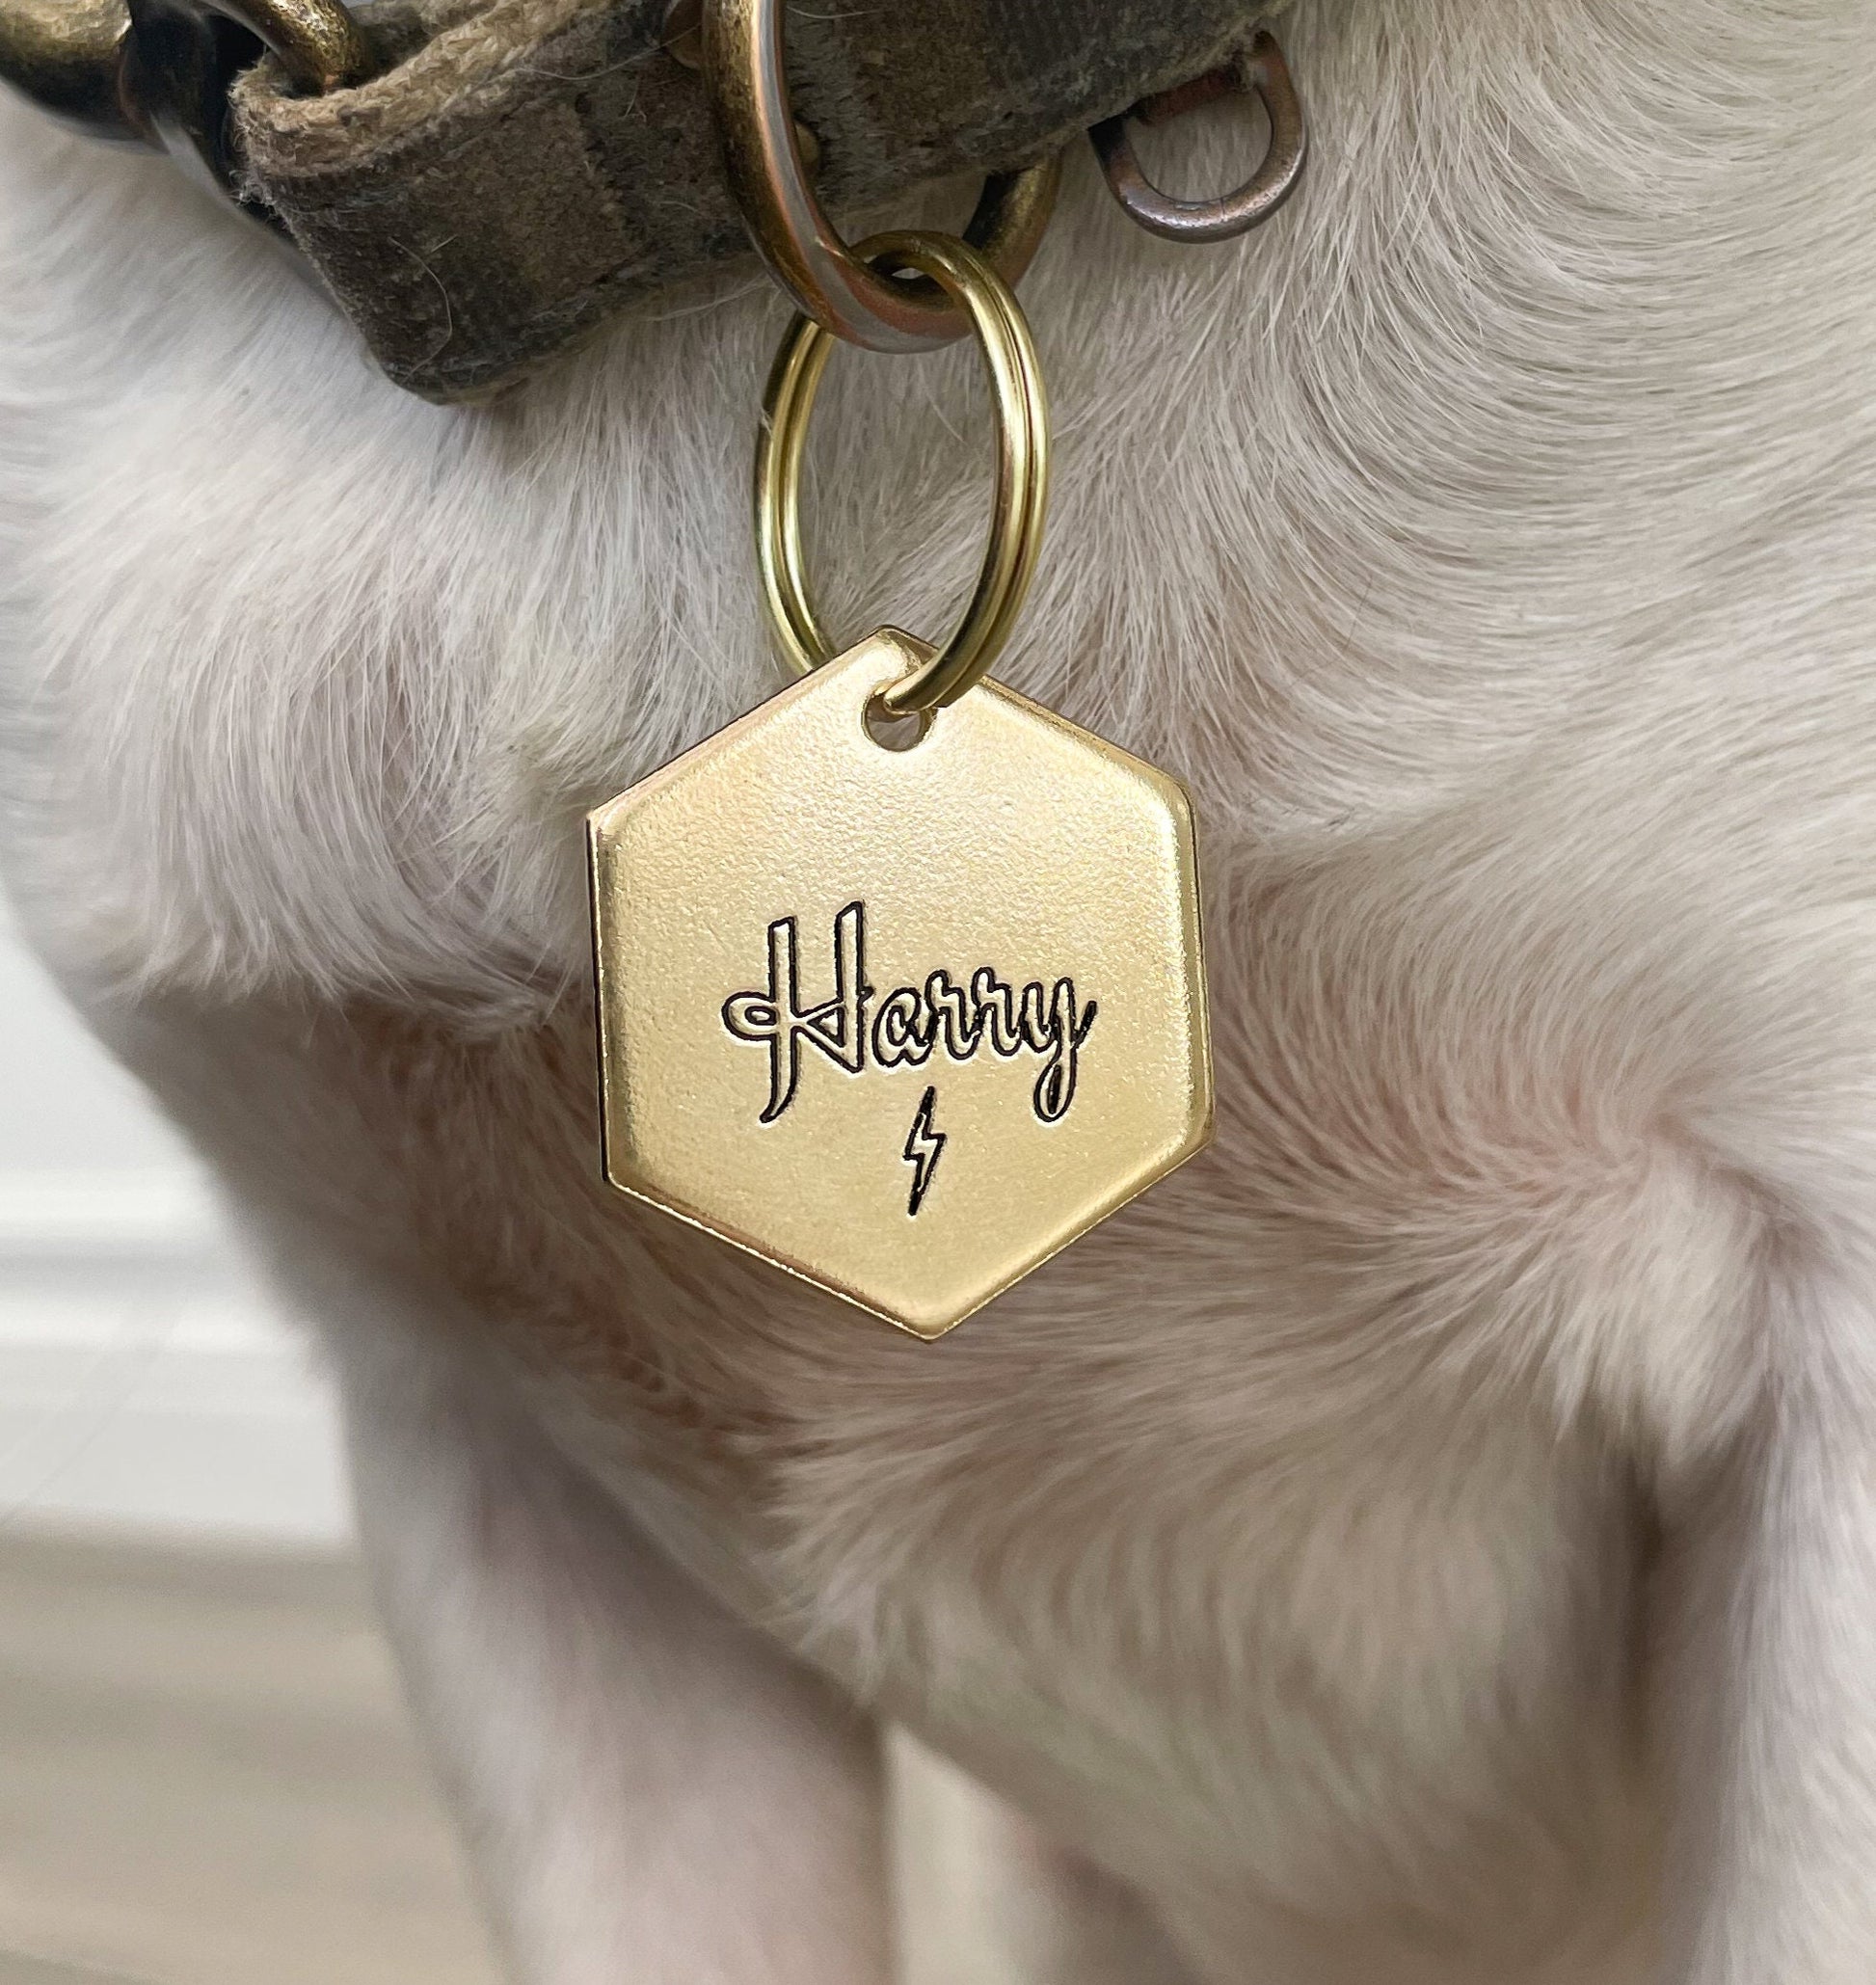 Lightning Bolt Design Engraved Dog Tag - Cat ID Tag - Dog Collar Tag - Custom Tag - Personalized Tag - Pet ID Tag - Pet Name Tag